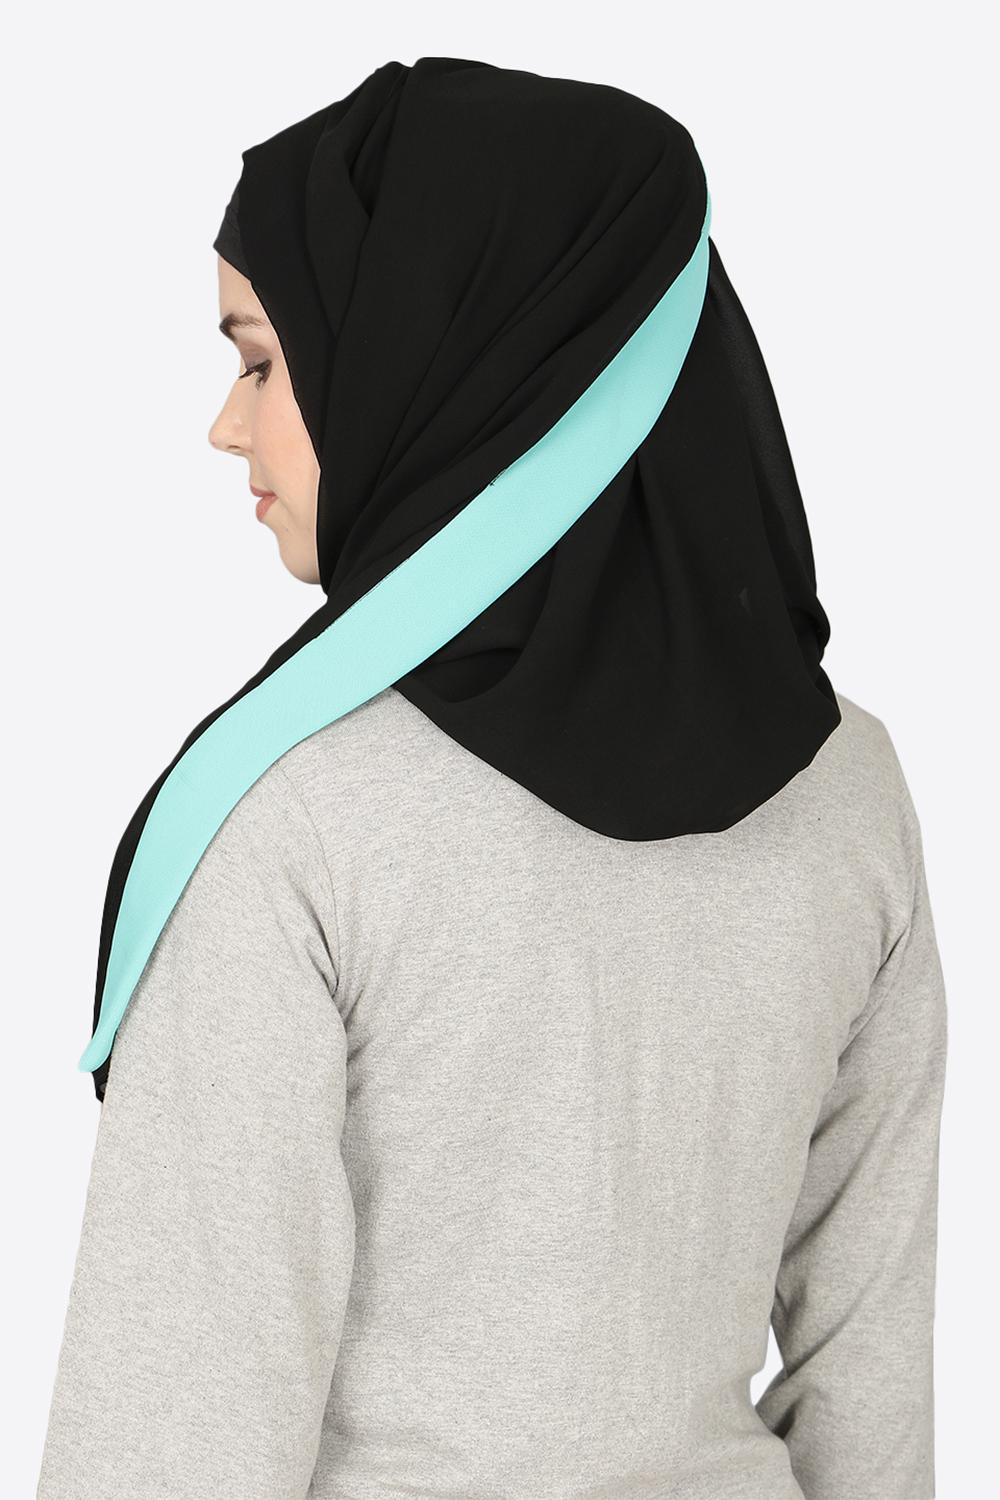 Hijab in Various Pattern